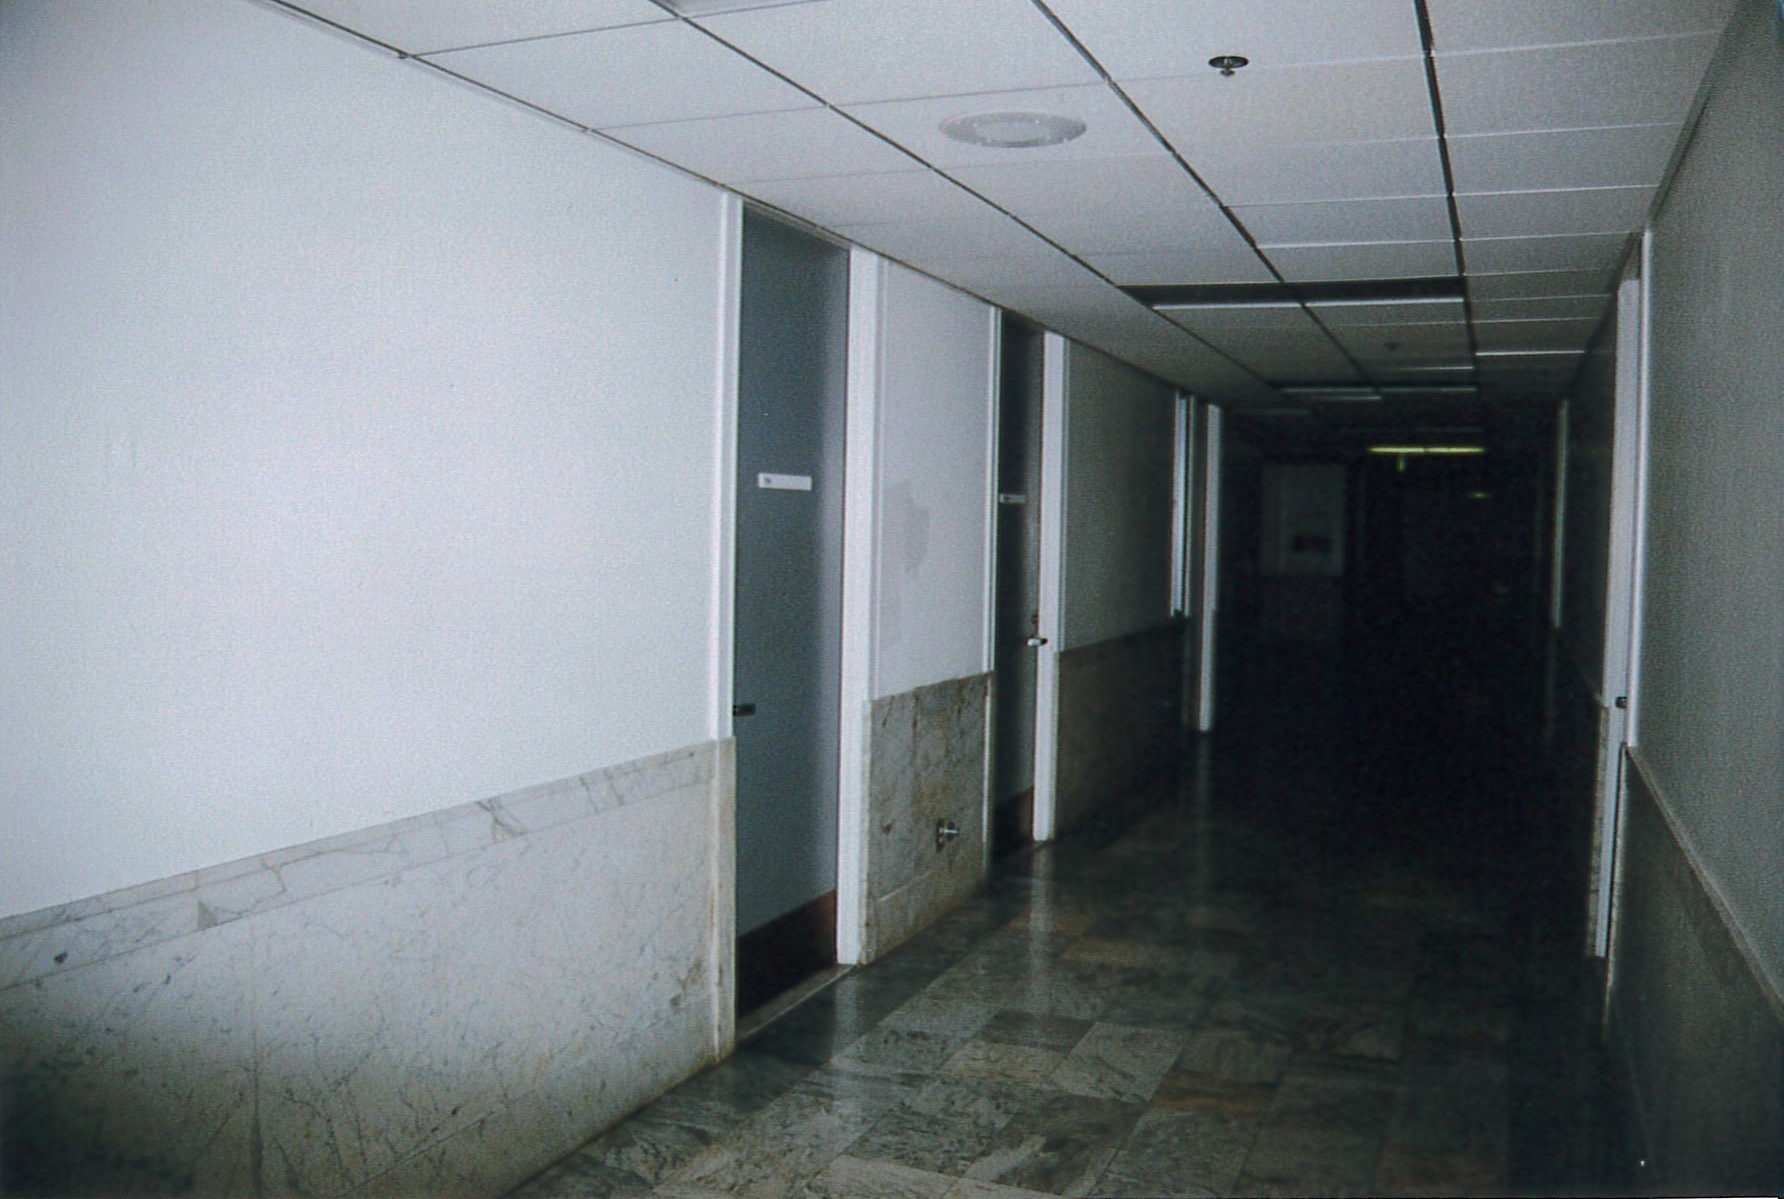 Third floor corridor showing original marble wainscoting and flooring 